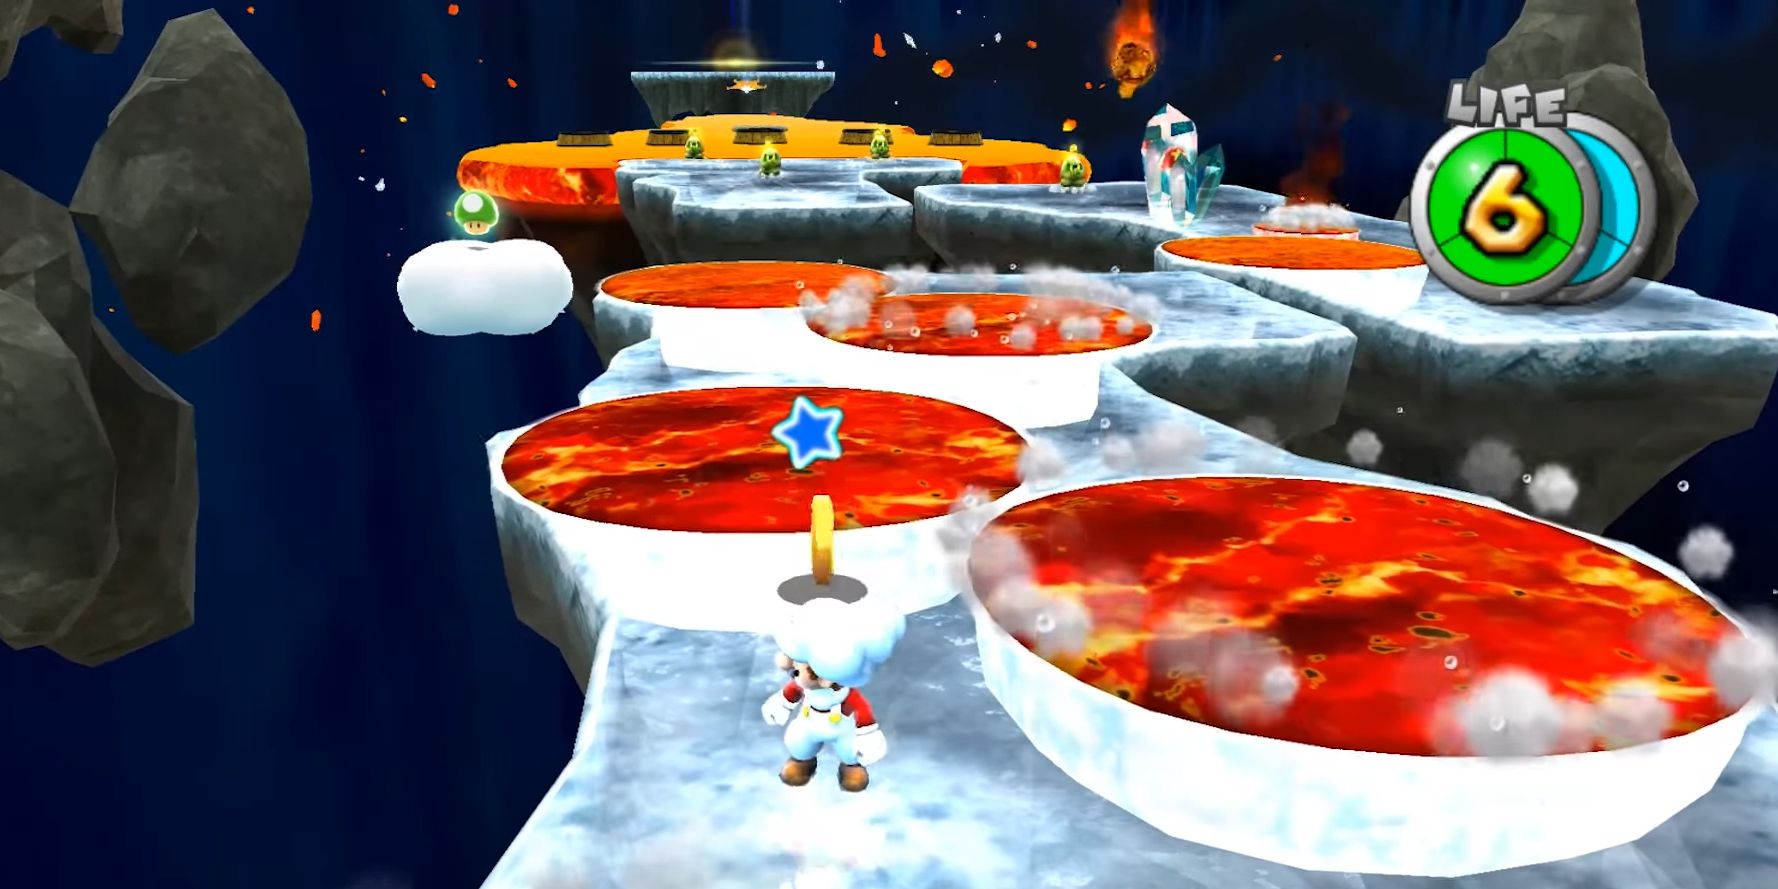 10 Best Snowy Levels In Mario Games